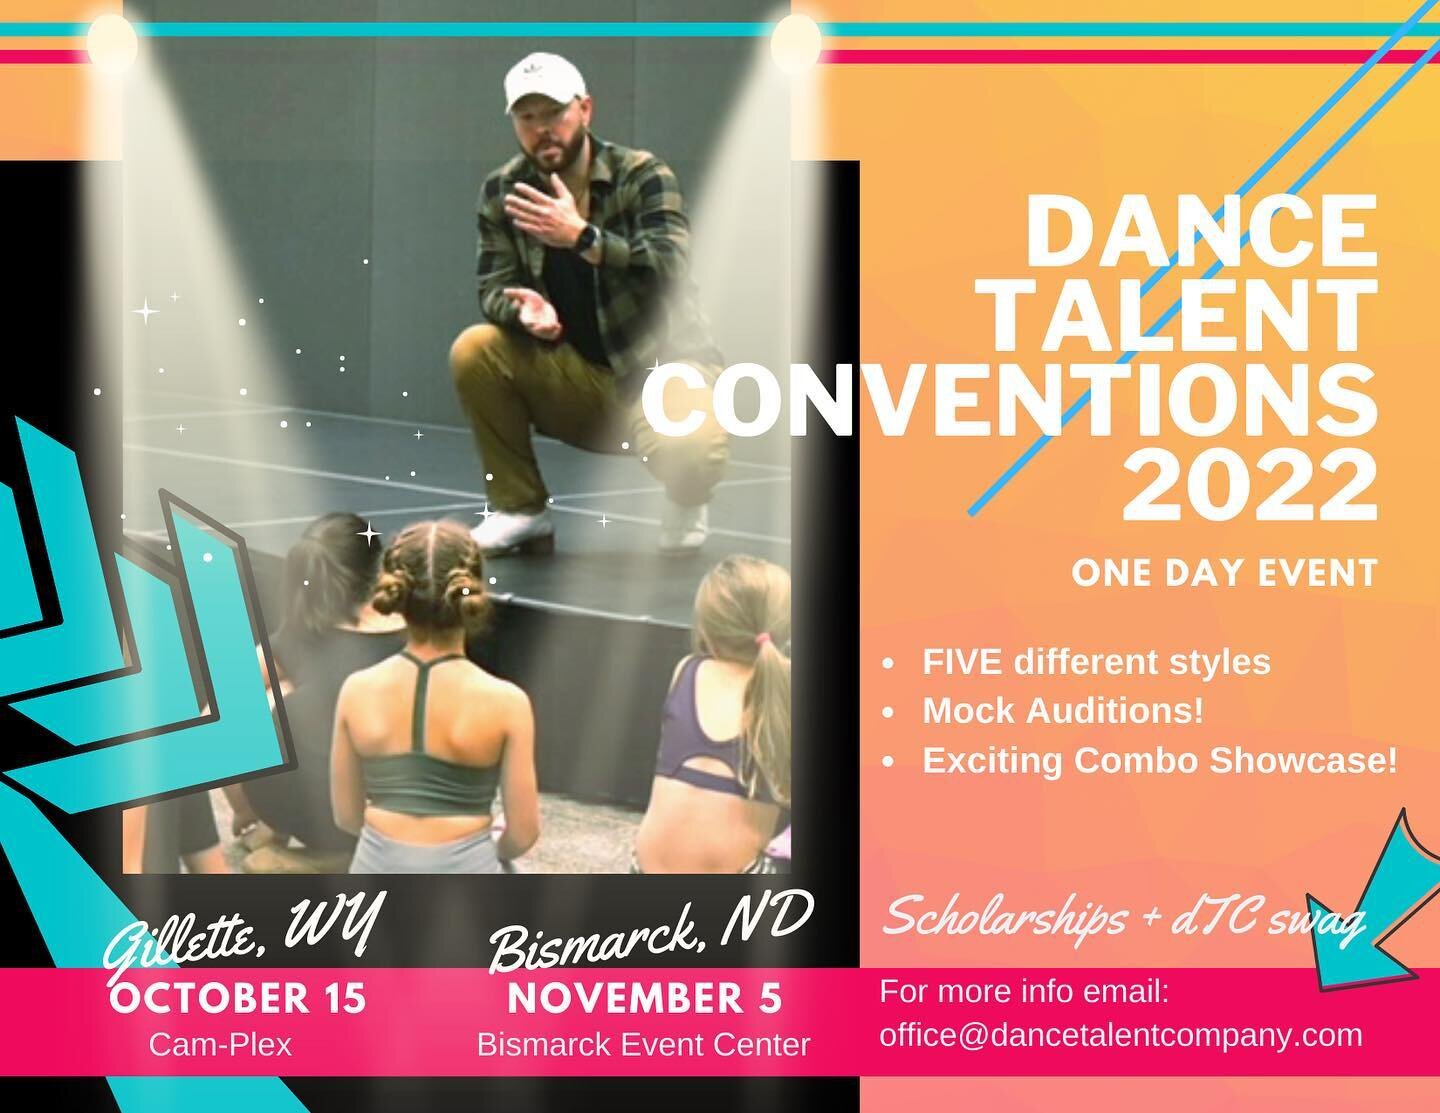 🍁 It&rsquo;s convention season!! 🍁Register today on our website: dancetalentcompany.com

DEADLINES:
Gillette, WY- September 23rd
Bismarck, ND- October 14th

#danceconventions #dtc2022 #dancetalent